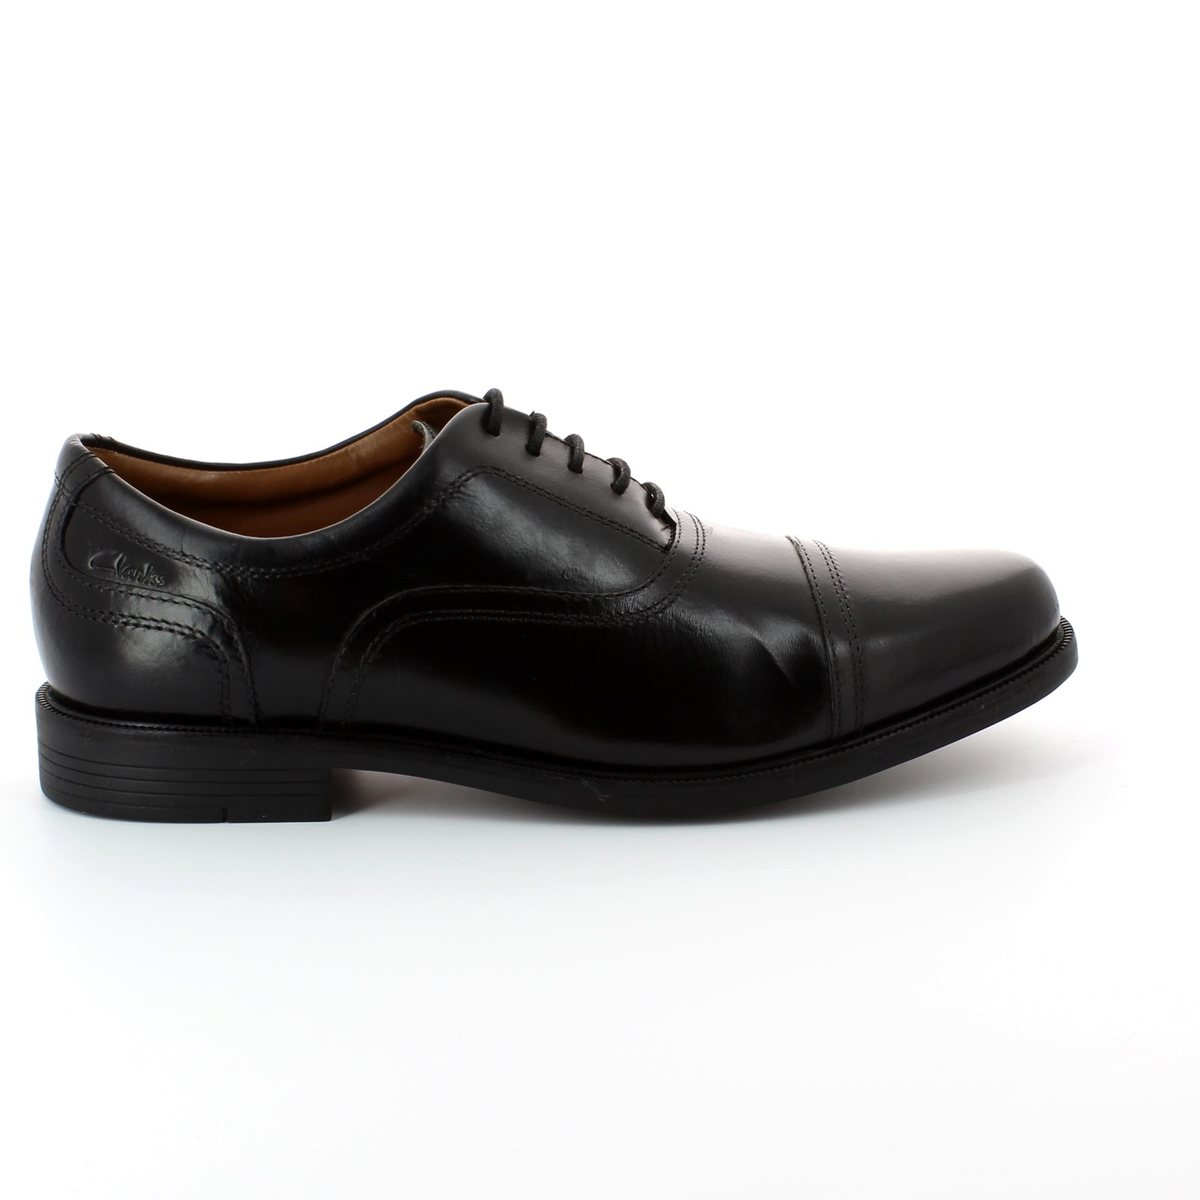 Clarks Beeston Cap G Fit Black formal shoes